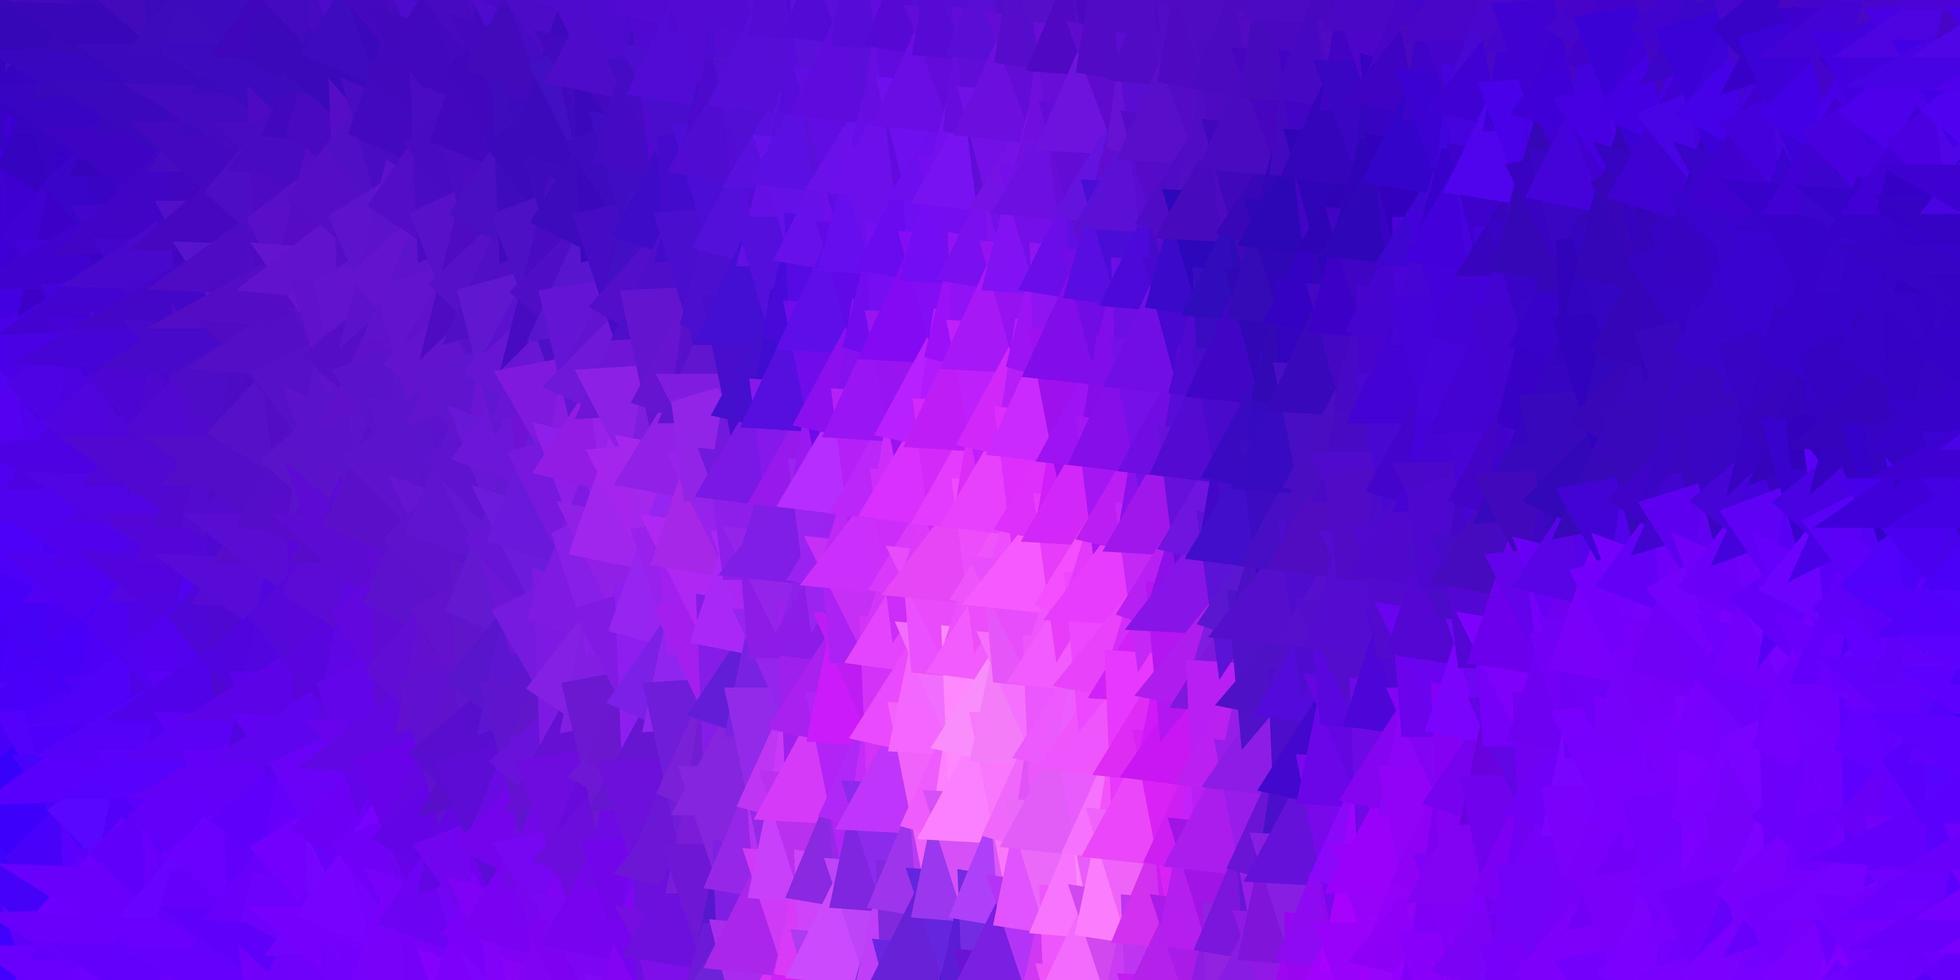 diseño poligonal geométrico vector púrpura oscuro.